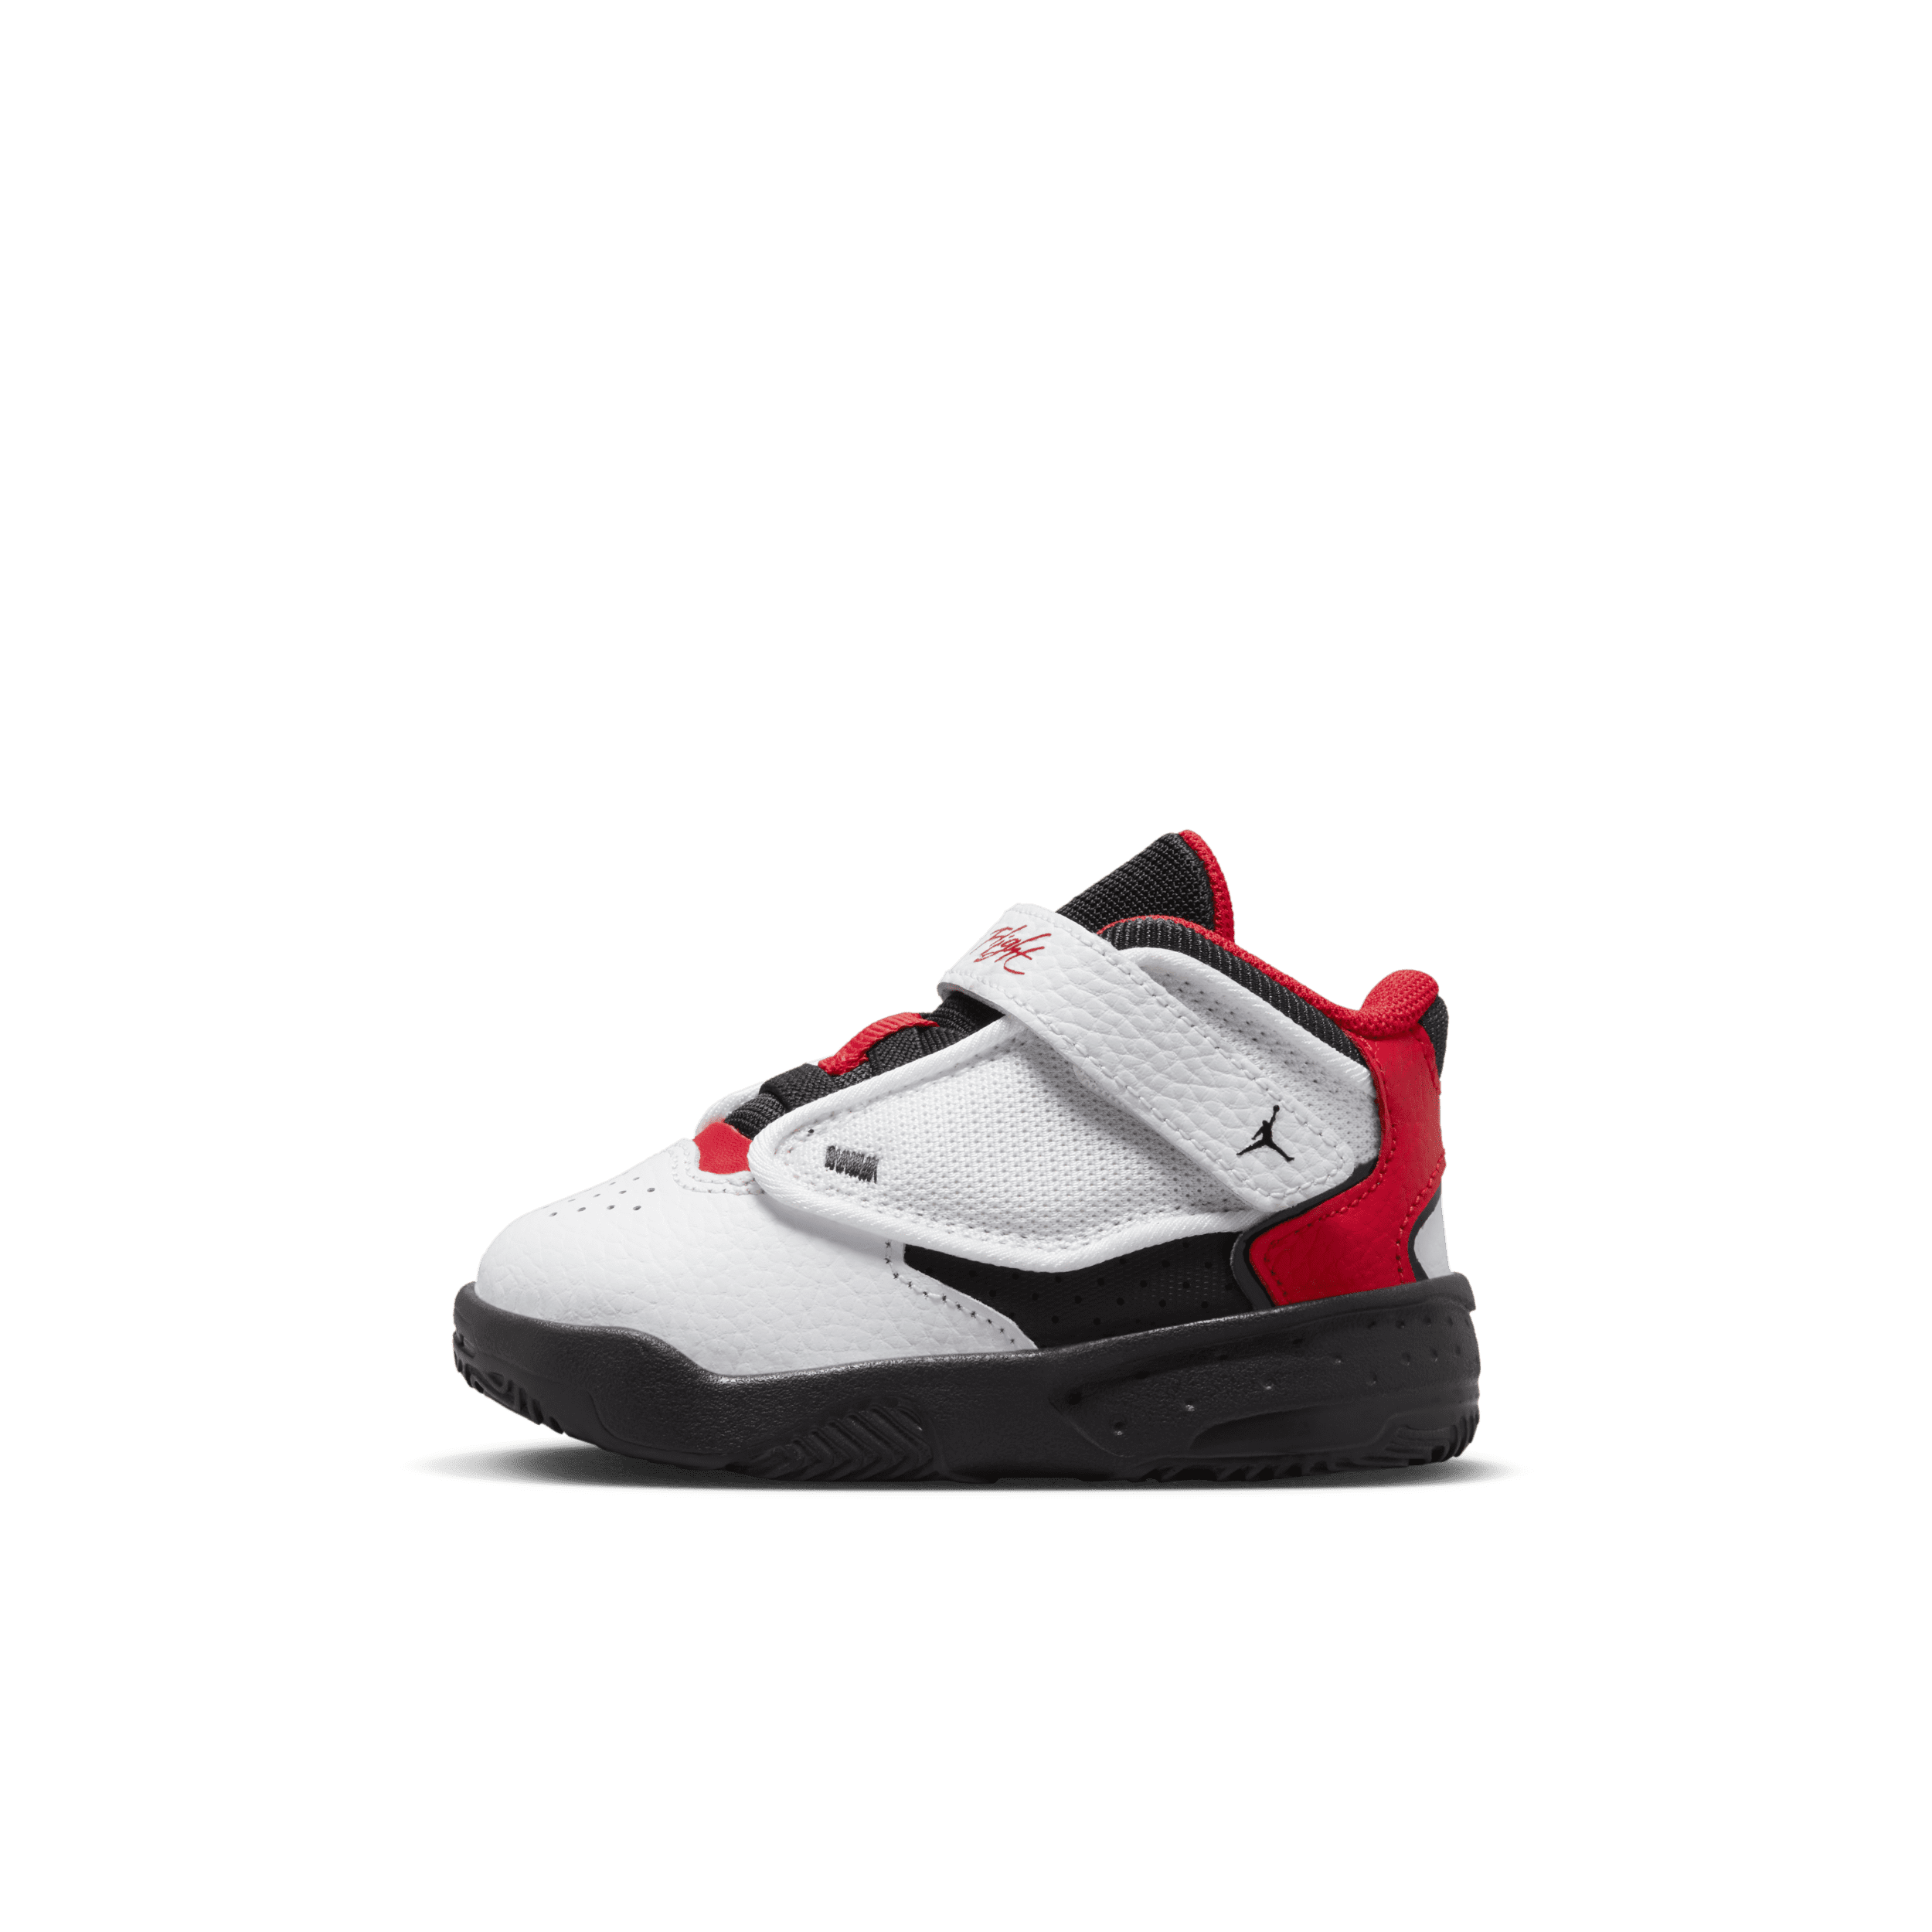 Jordan Max Aura 4-sko til babyer/småbørn - hvid